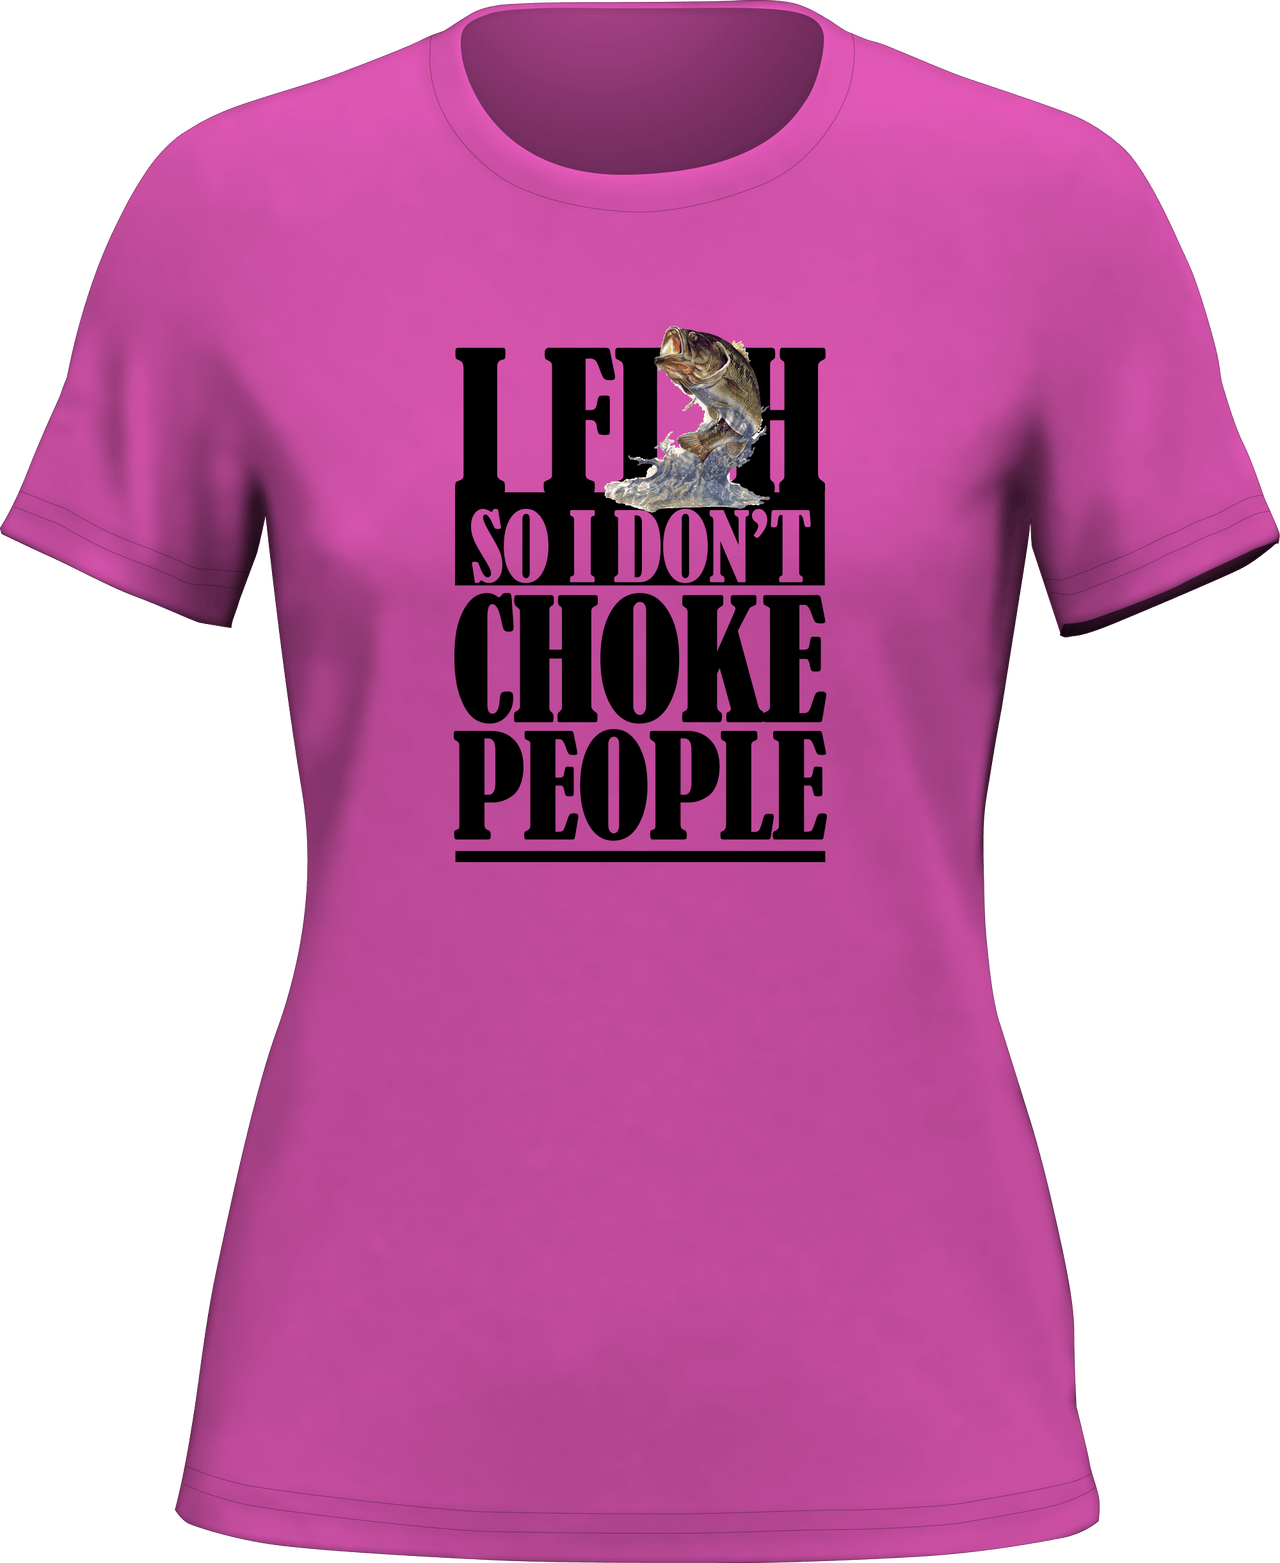 I Fish So I Don't Choke People T-Shirt for Women